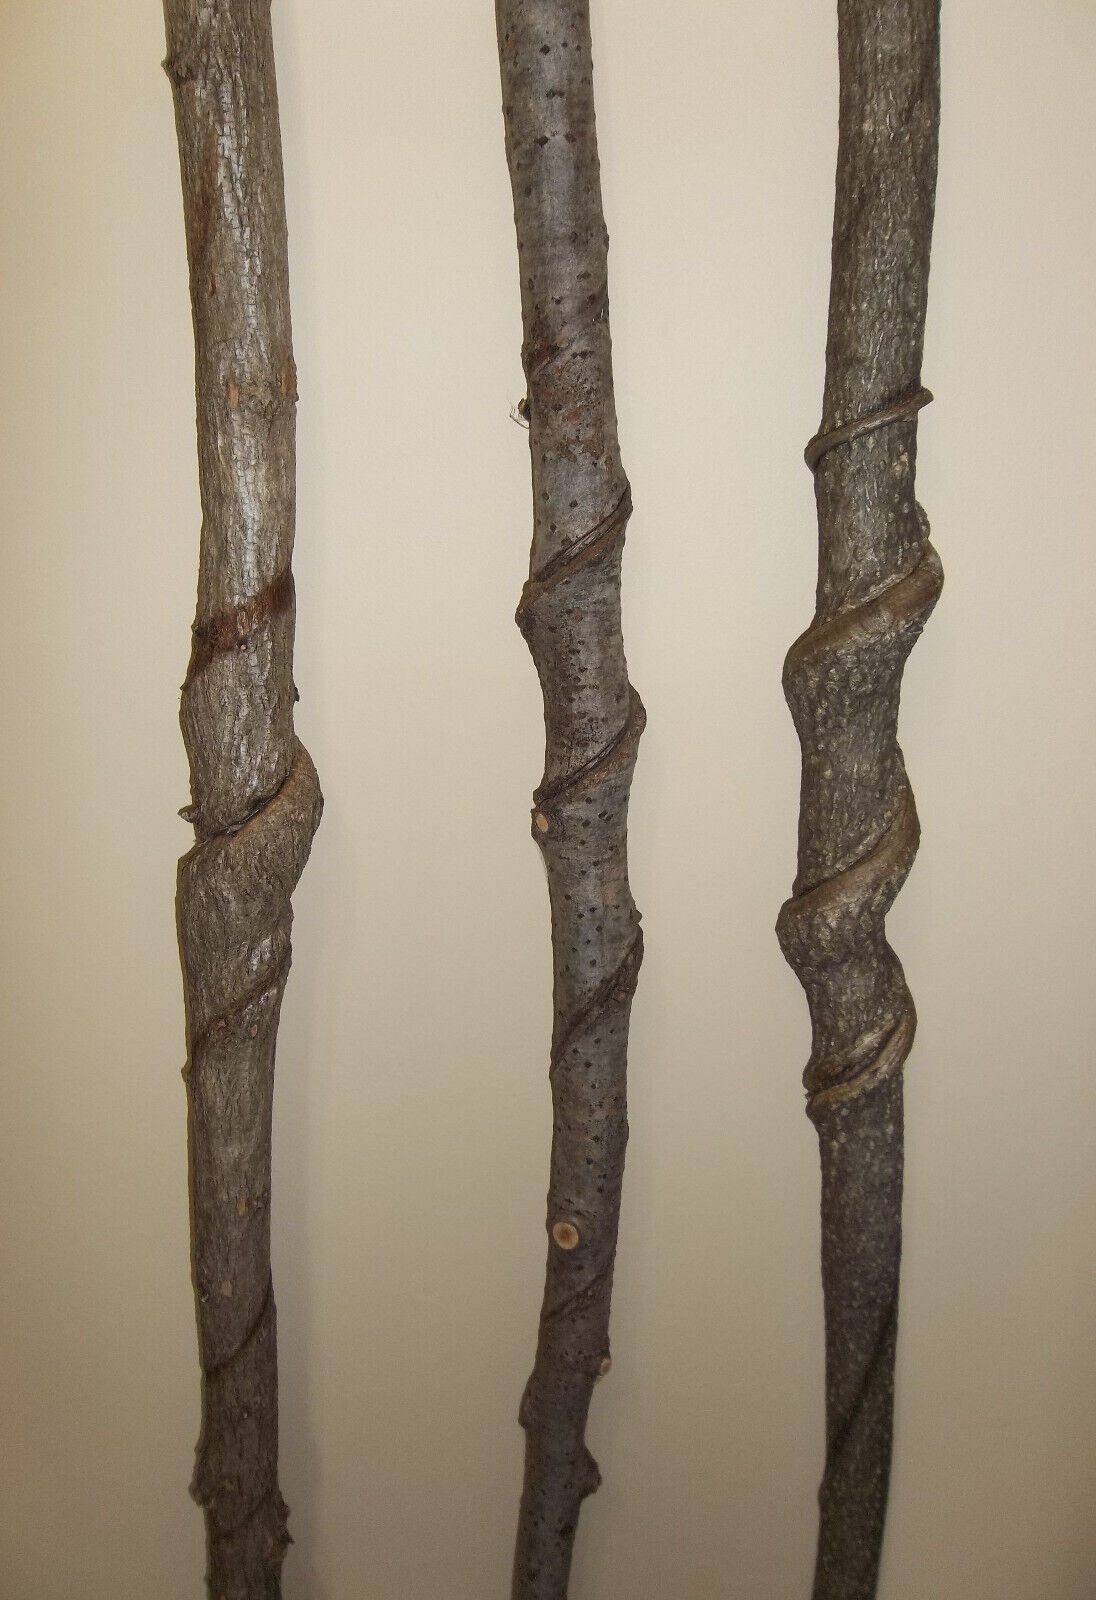 3 Vine Twisted Spiral Curled Walking Hiking Sticks Craft Wood Carving Blanks G12